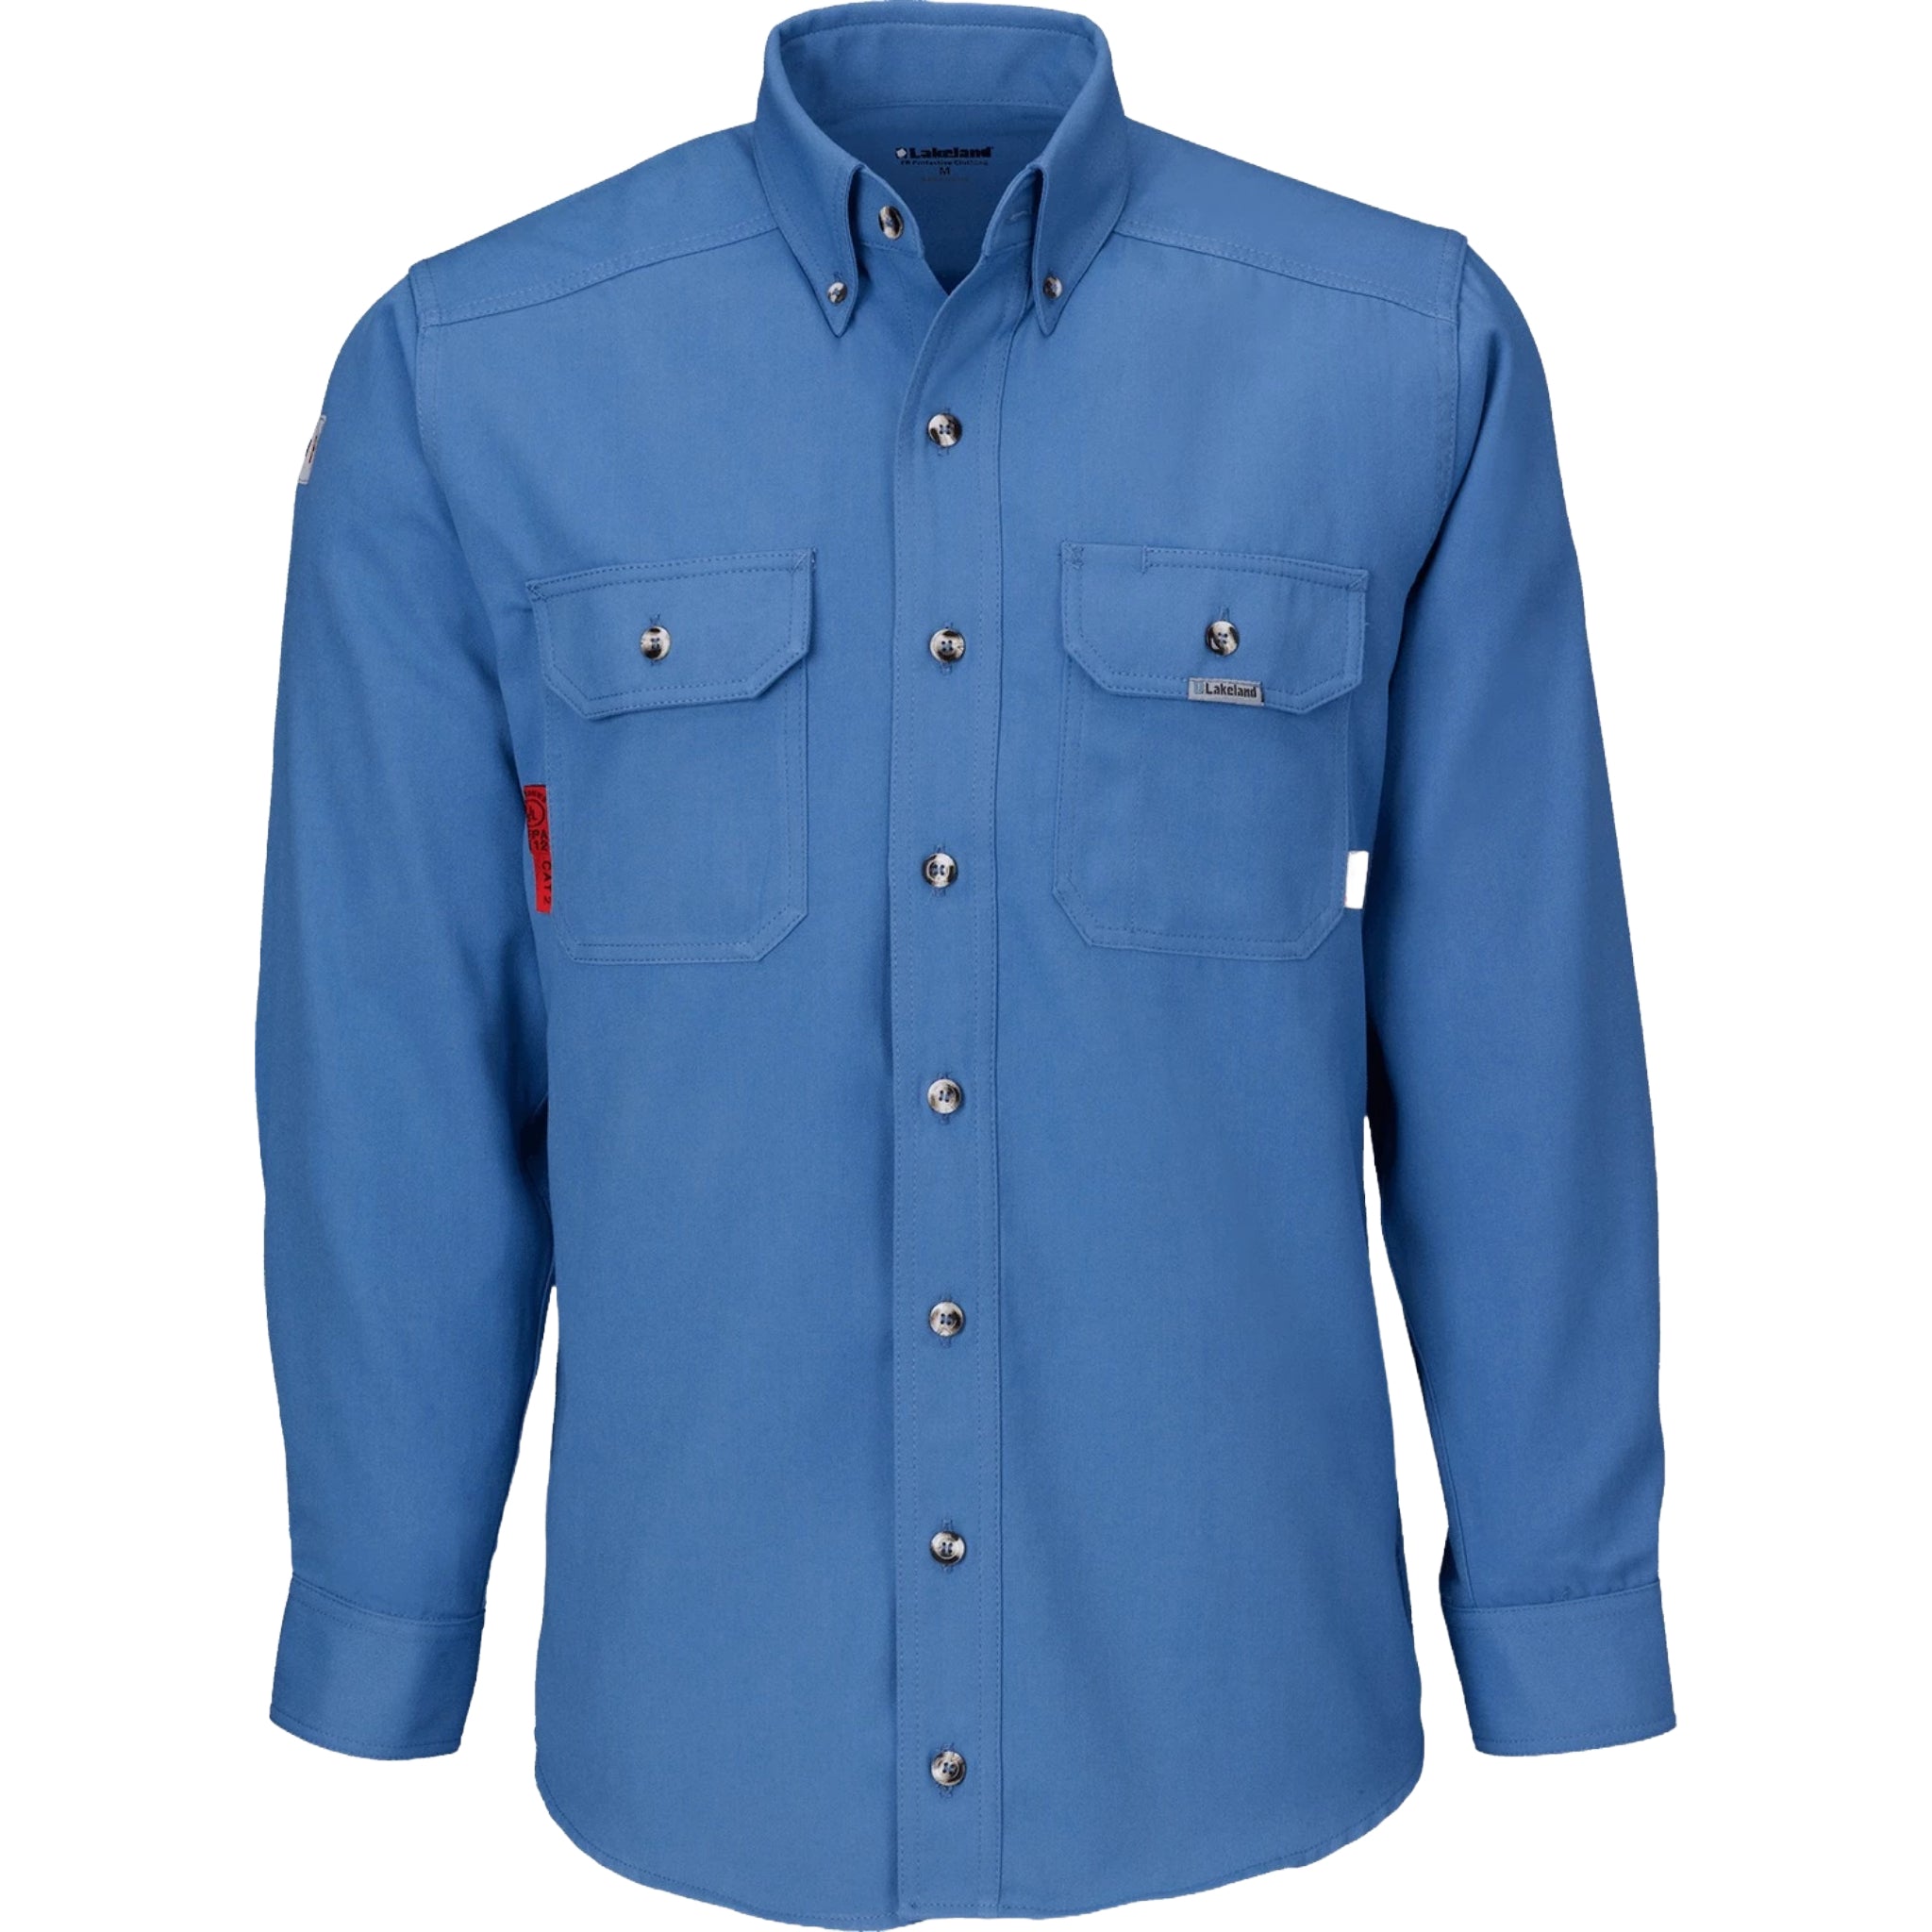 LAKELAND ISH65DH08 FR Westex DH 6.5 Oz. Shirt, Medium Blue, 1 Each